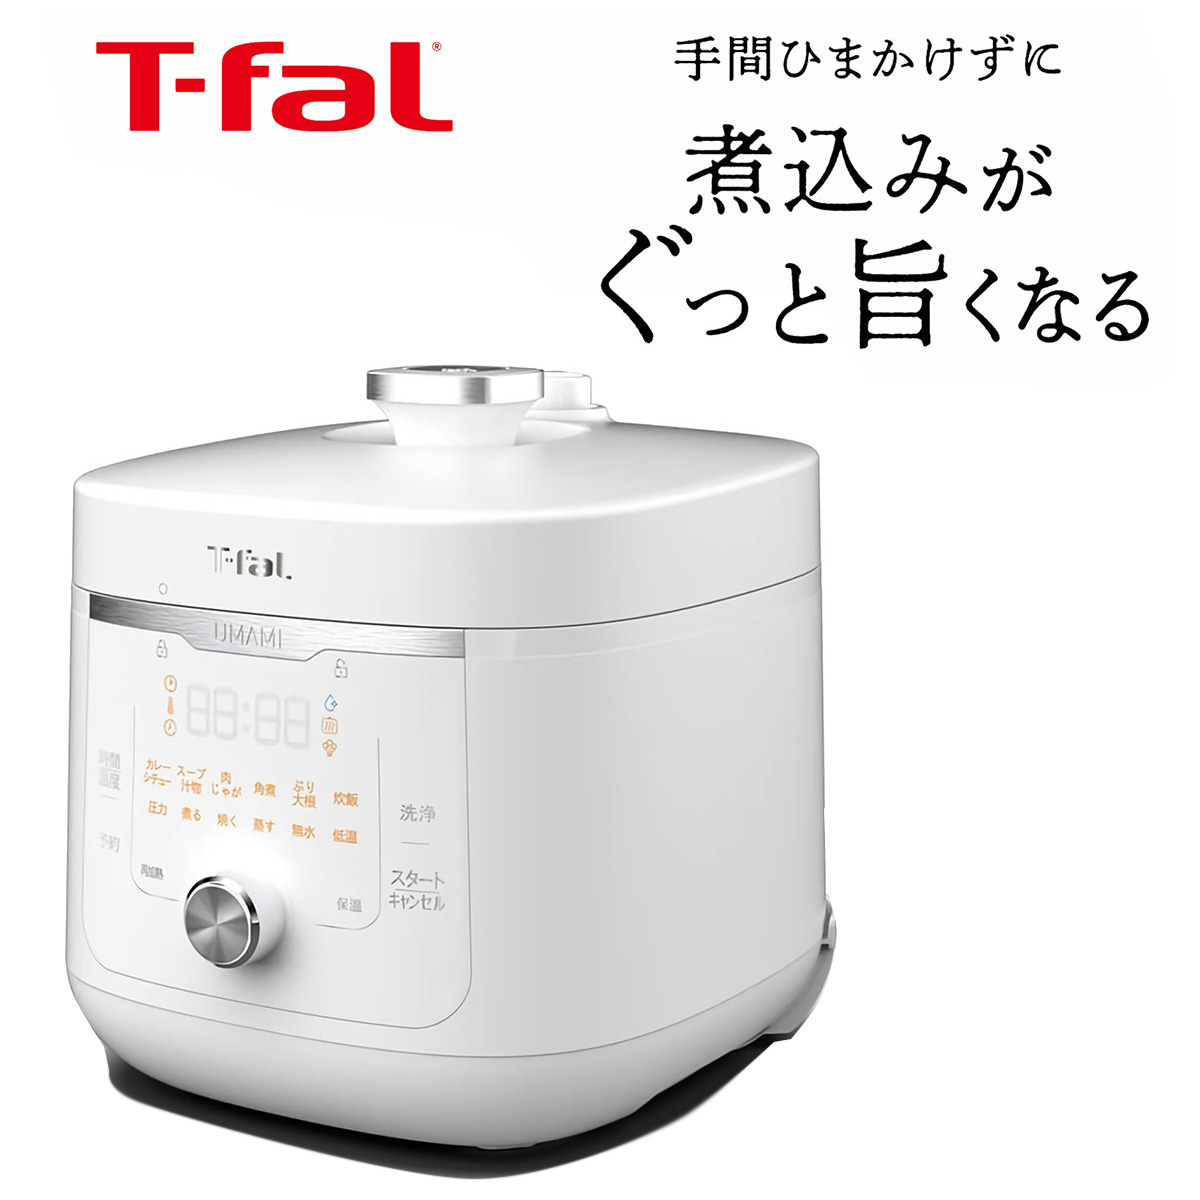 T-fal 旨み電気圧力鍋 ラクラ・クッカー 4L ホワイト マルチクッカー 圧力調理 炒める 煮込む 蒸す